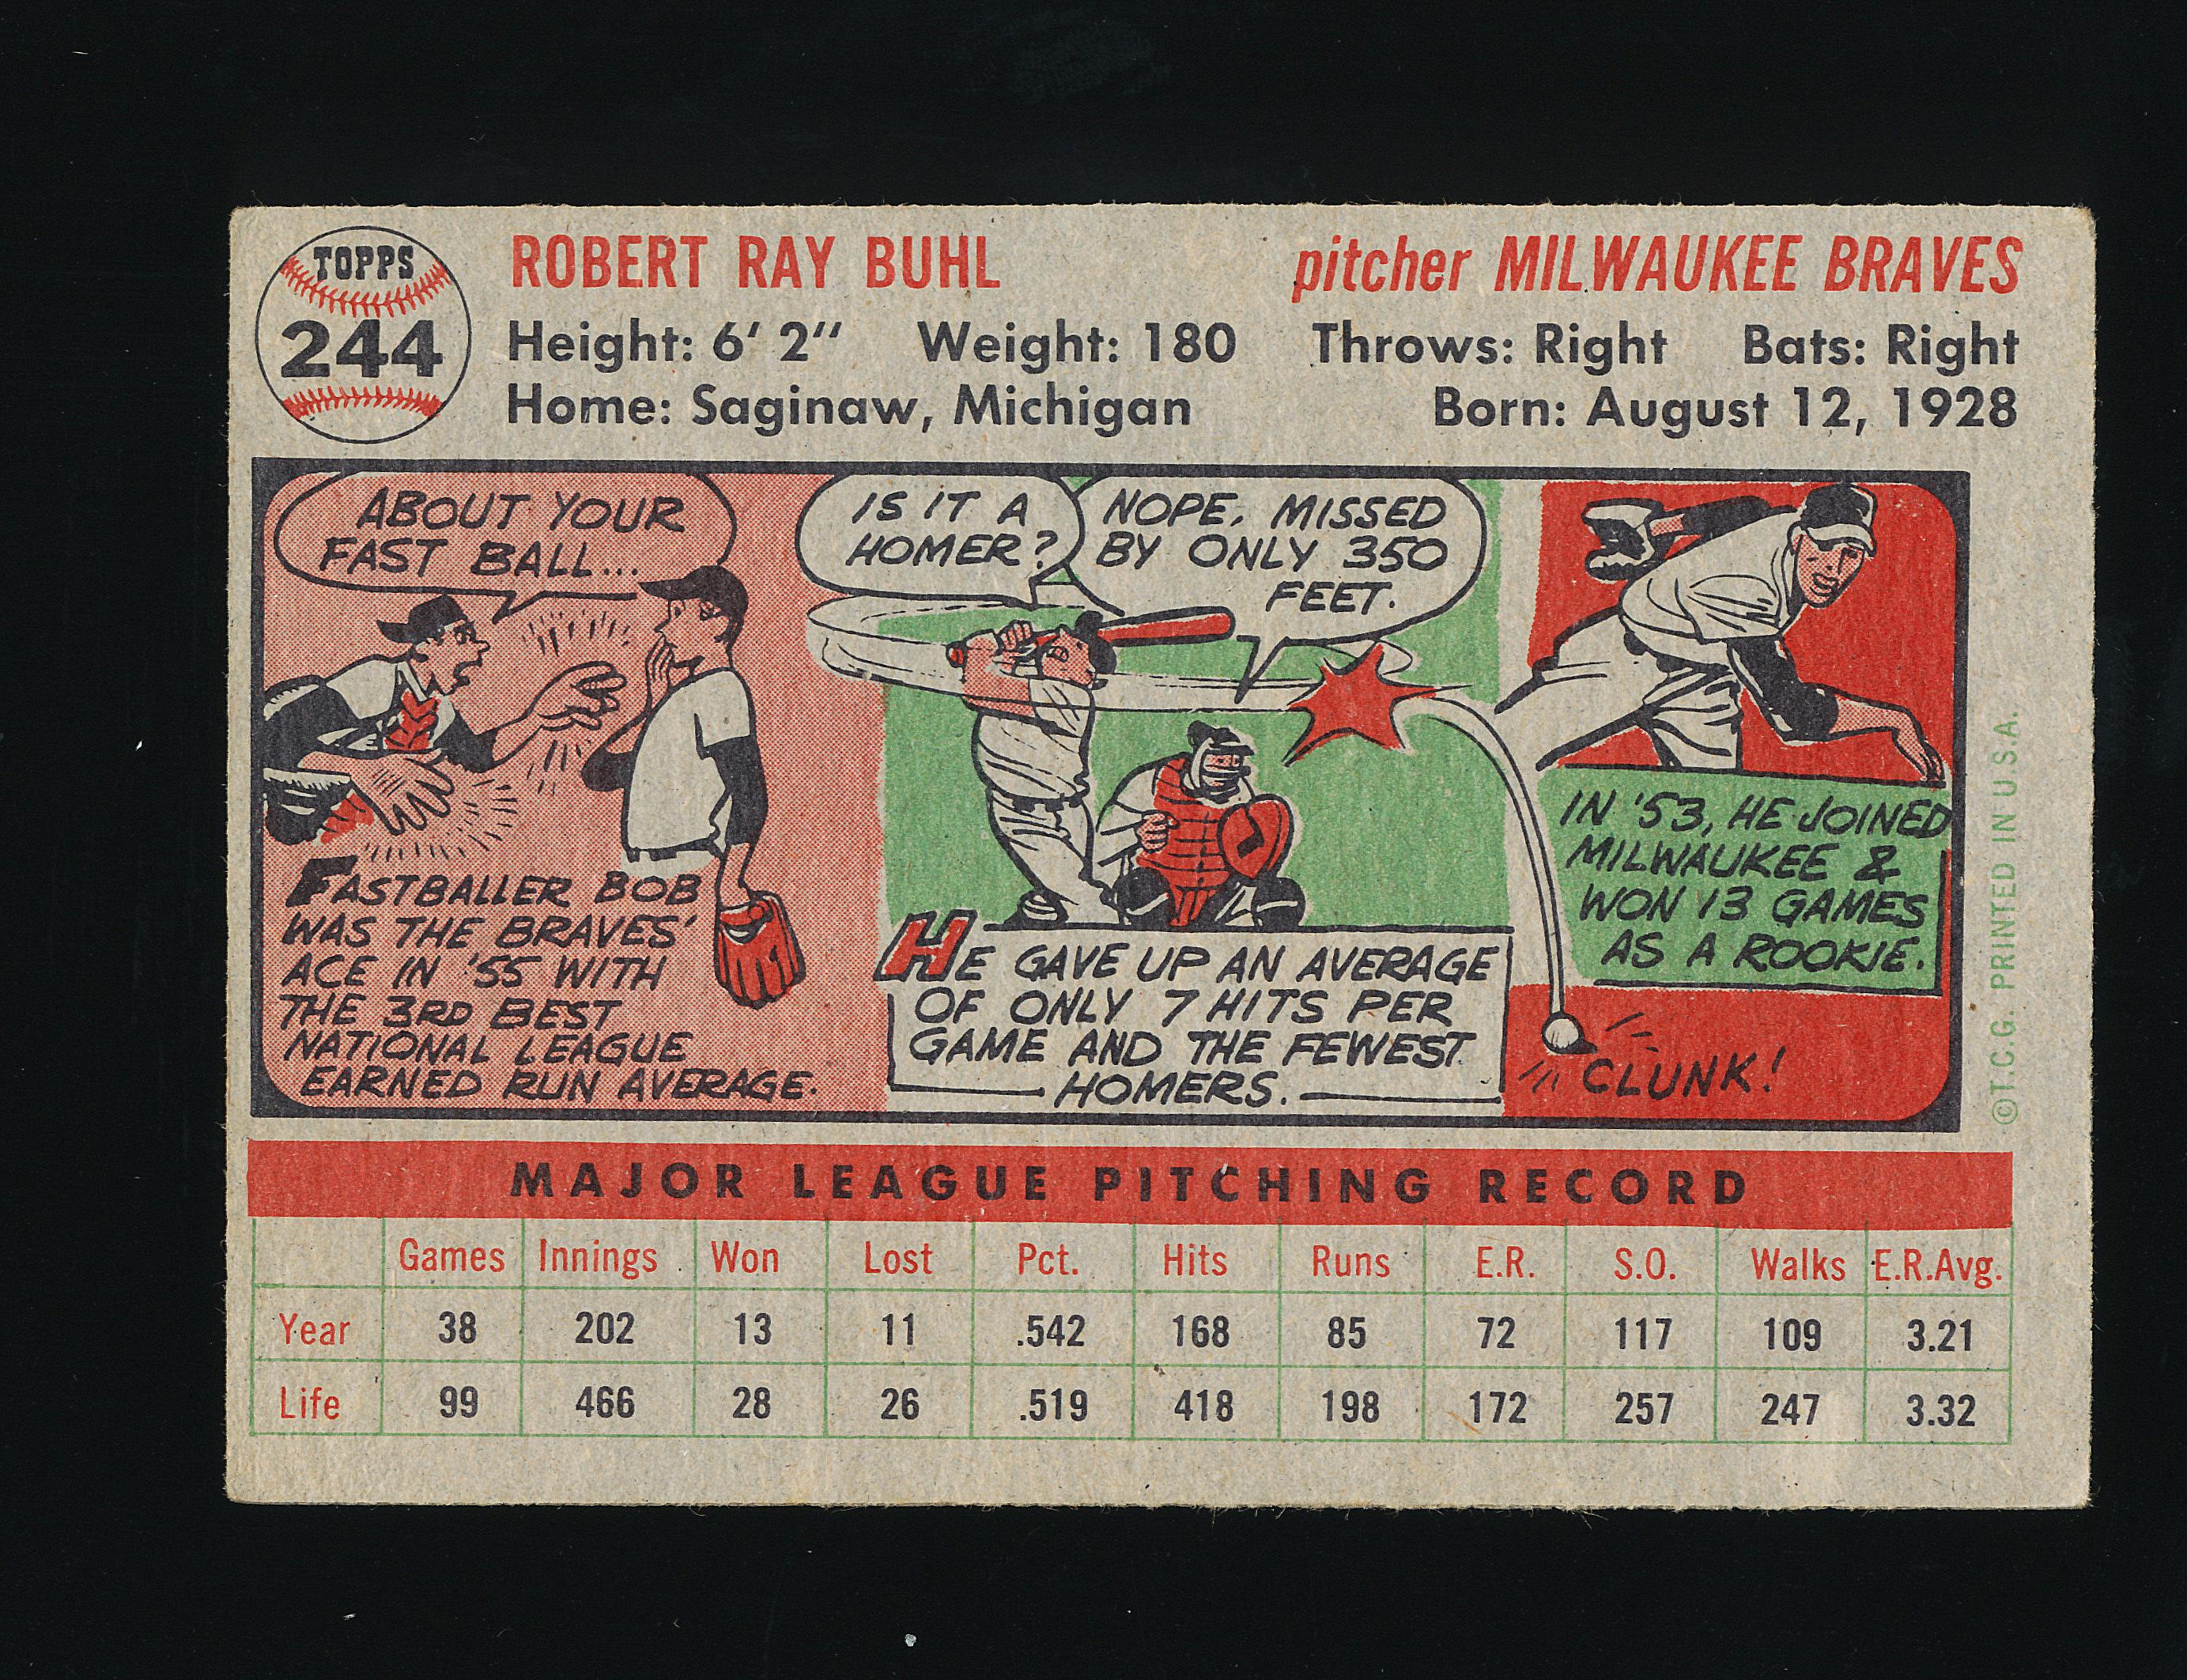 1957 Topps Baseball Card #244 Bob Buhl Milwaukee Braves